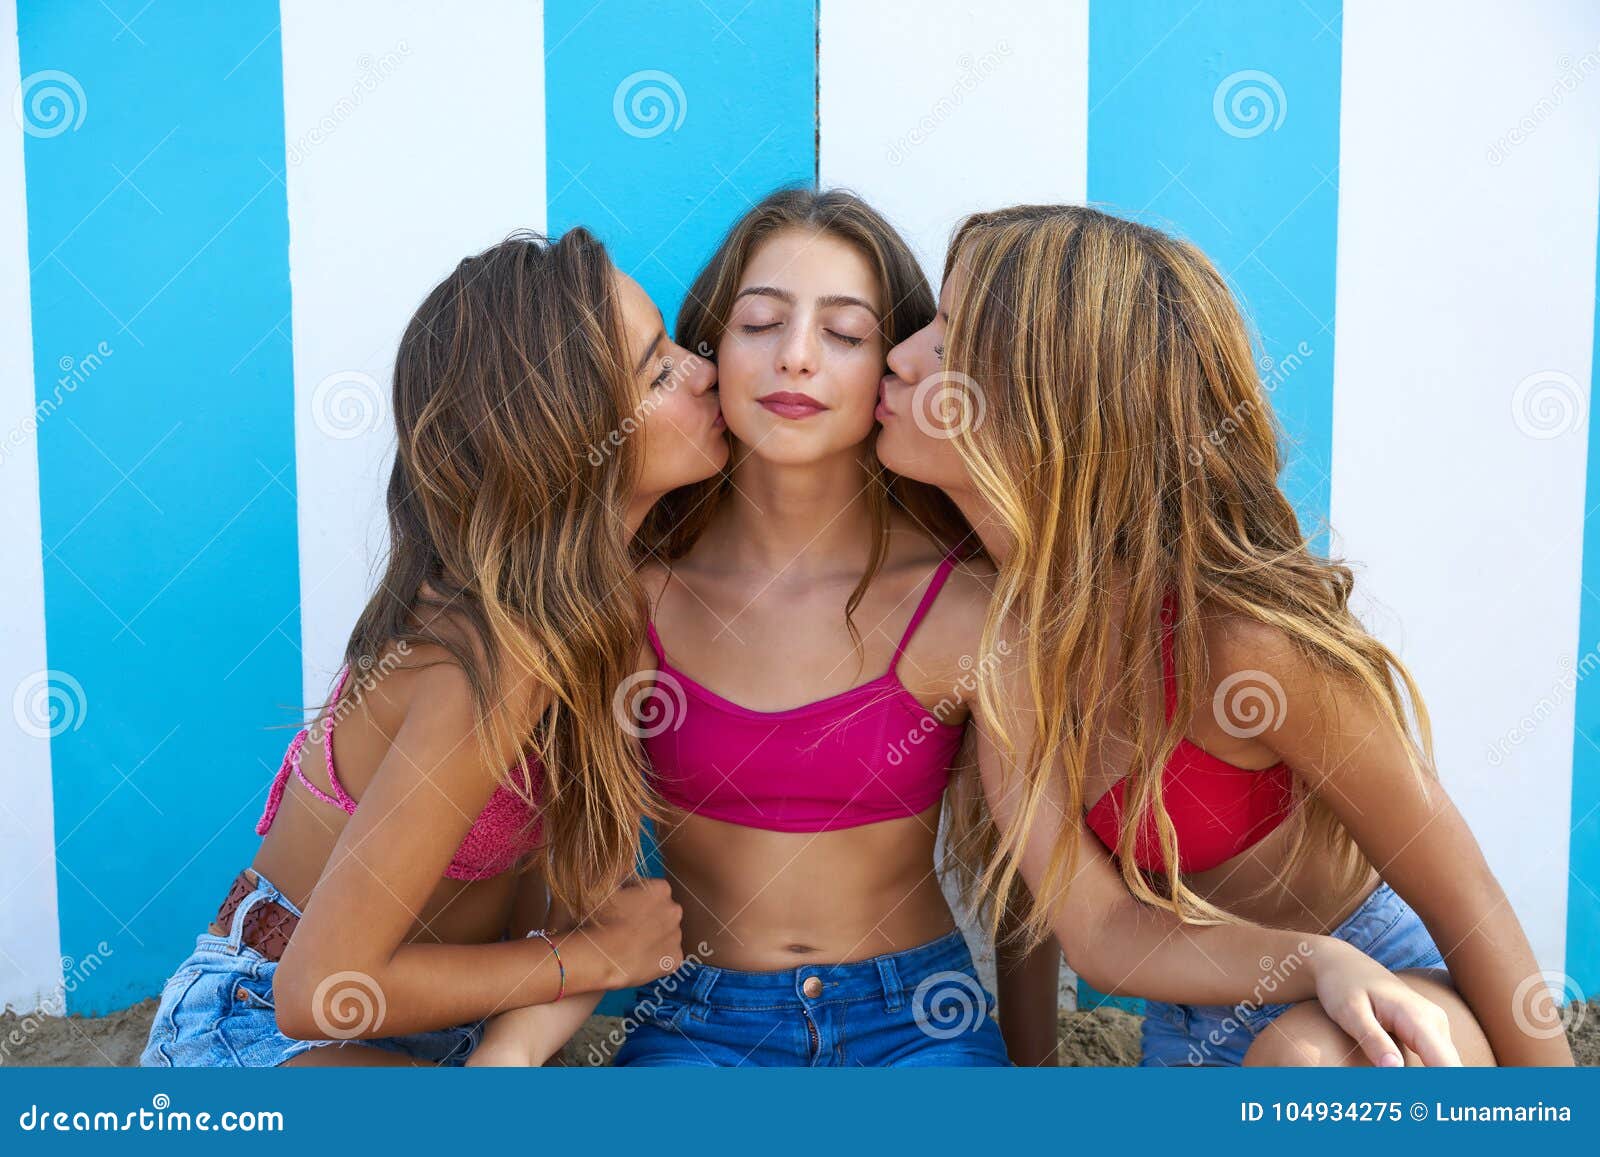 self shot girls kissing video gallerie photo